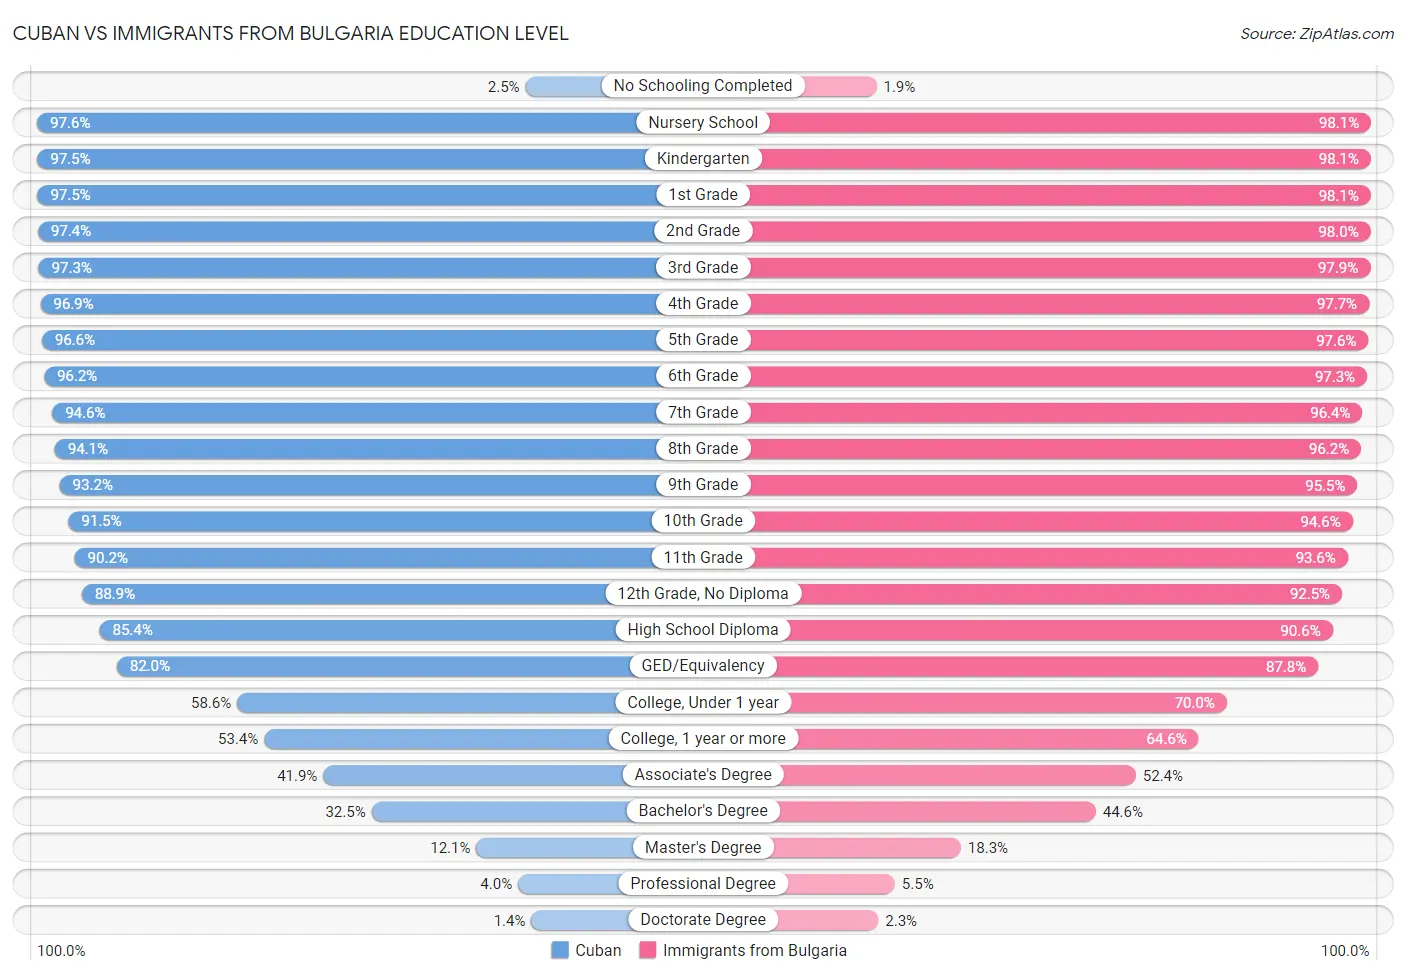 Cuban vs Immigrants from Bulgaria Education Level